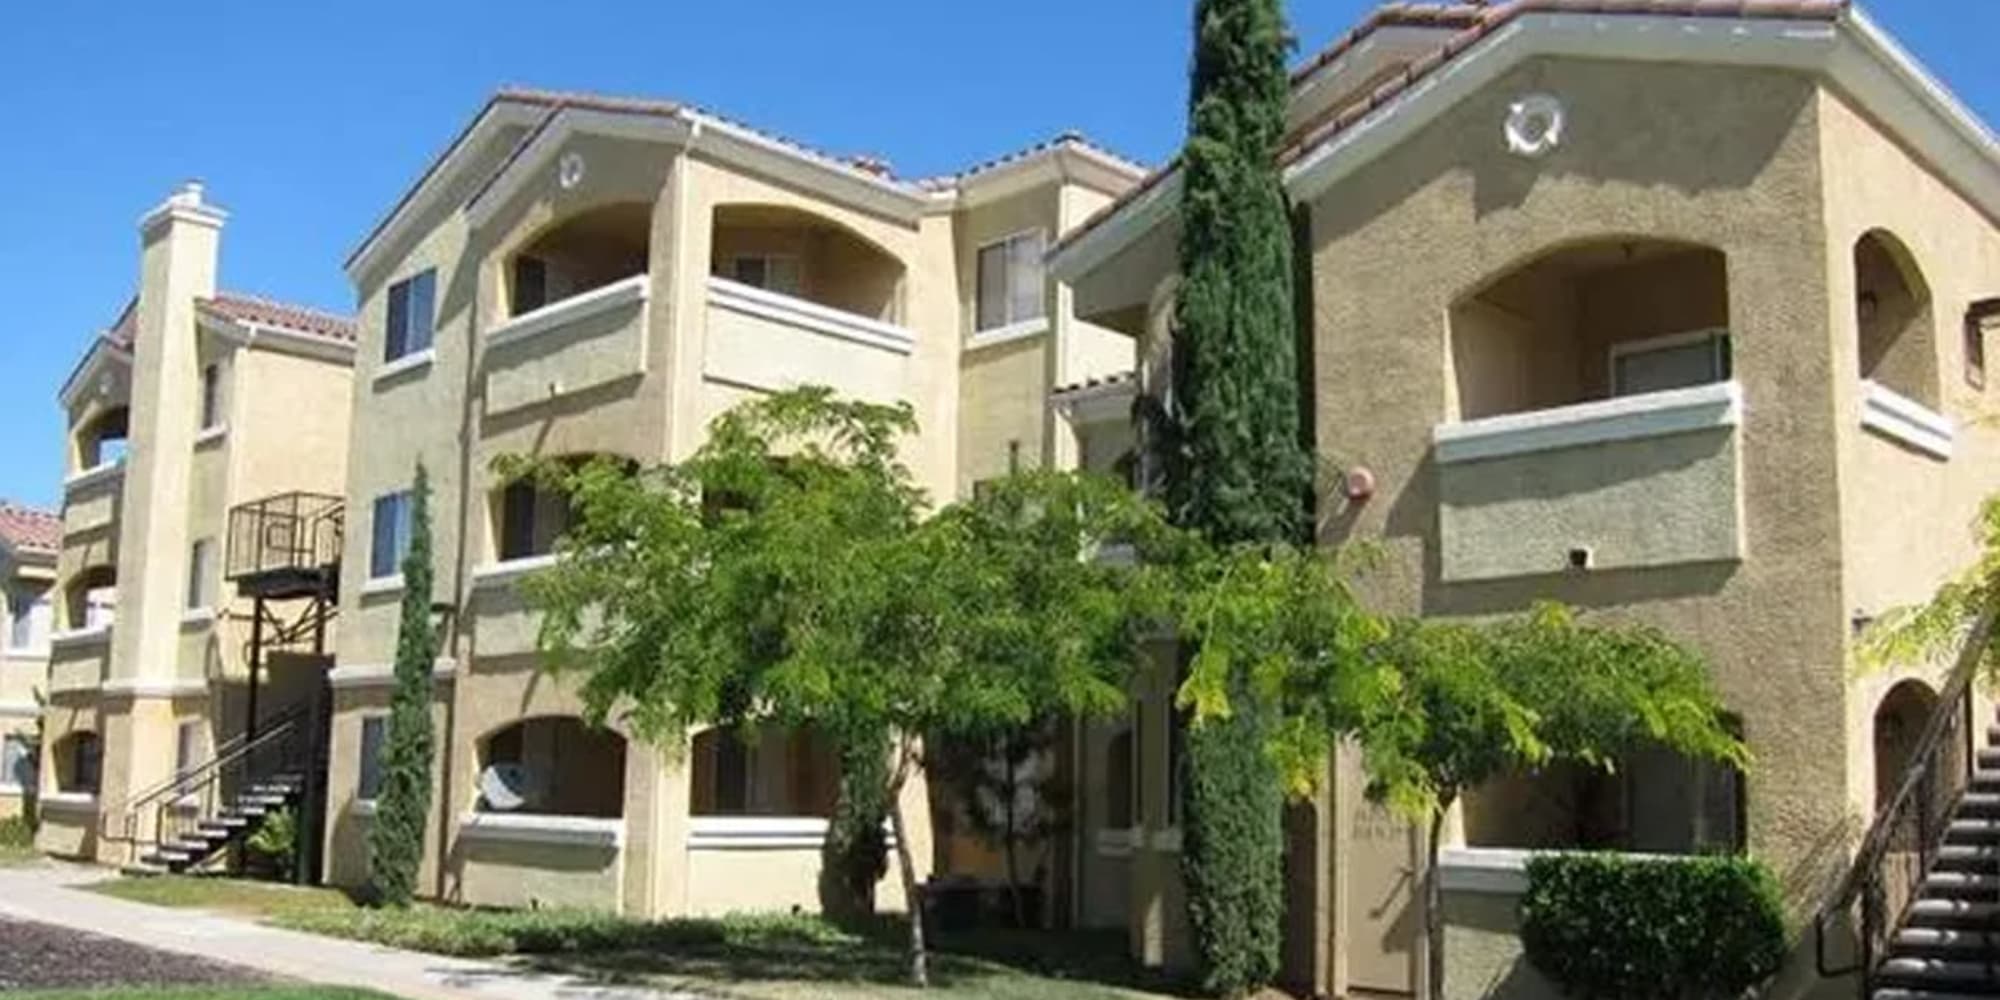 Exterior of Siena Villas Apartments in Elk Grove, California